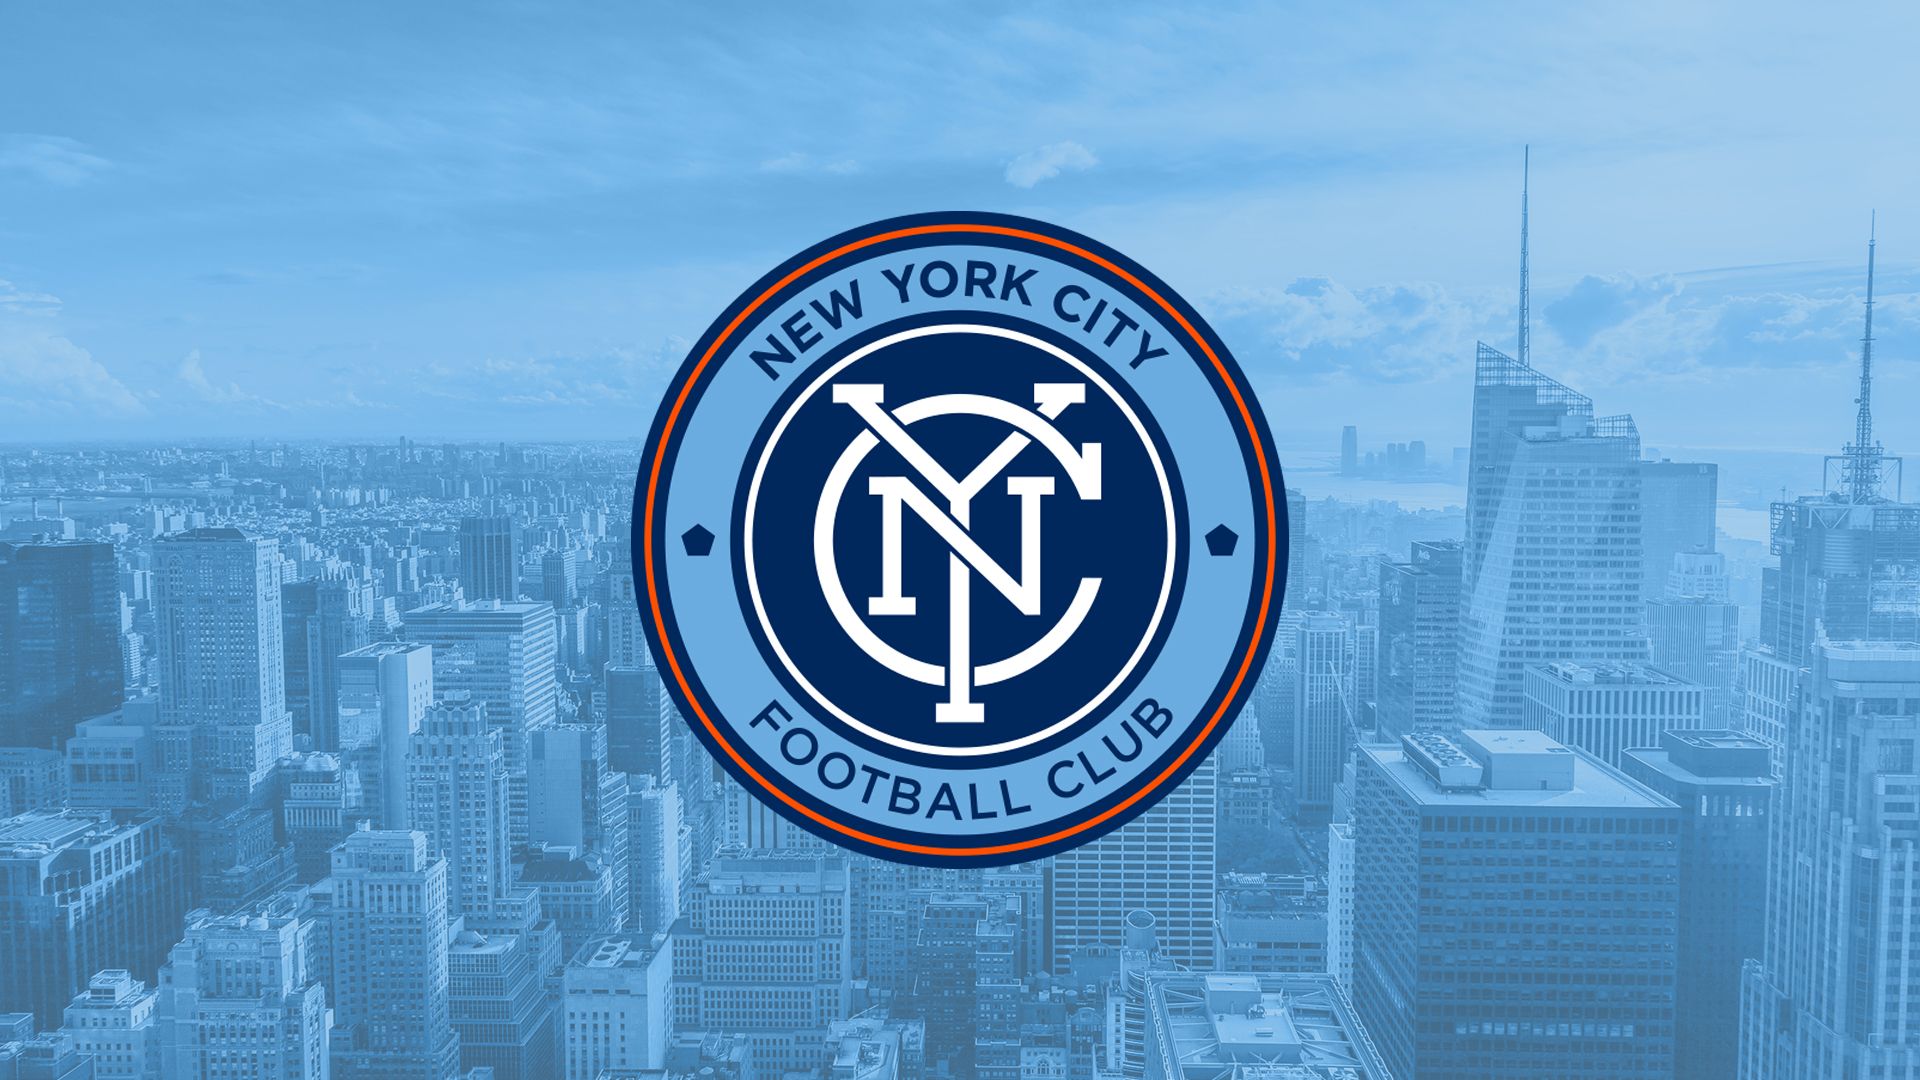 New York City FC fondo y papel tapiz | New York City FC